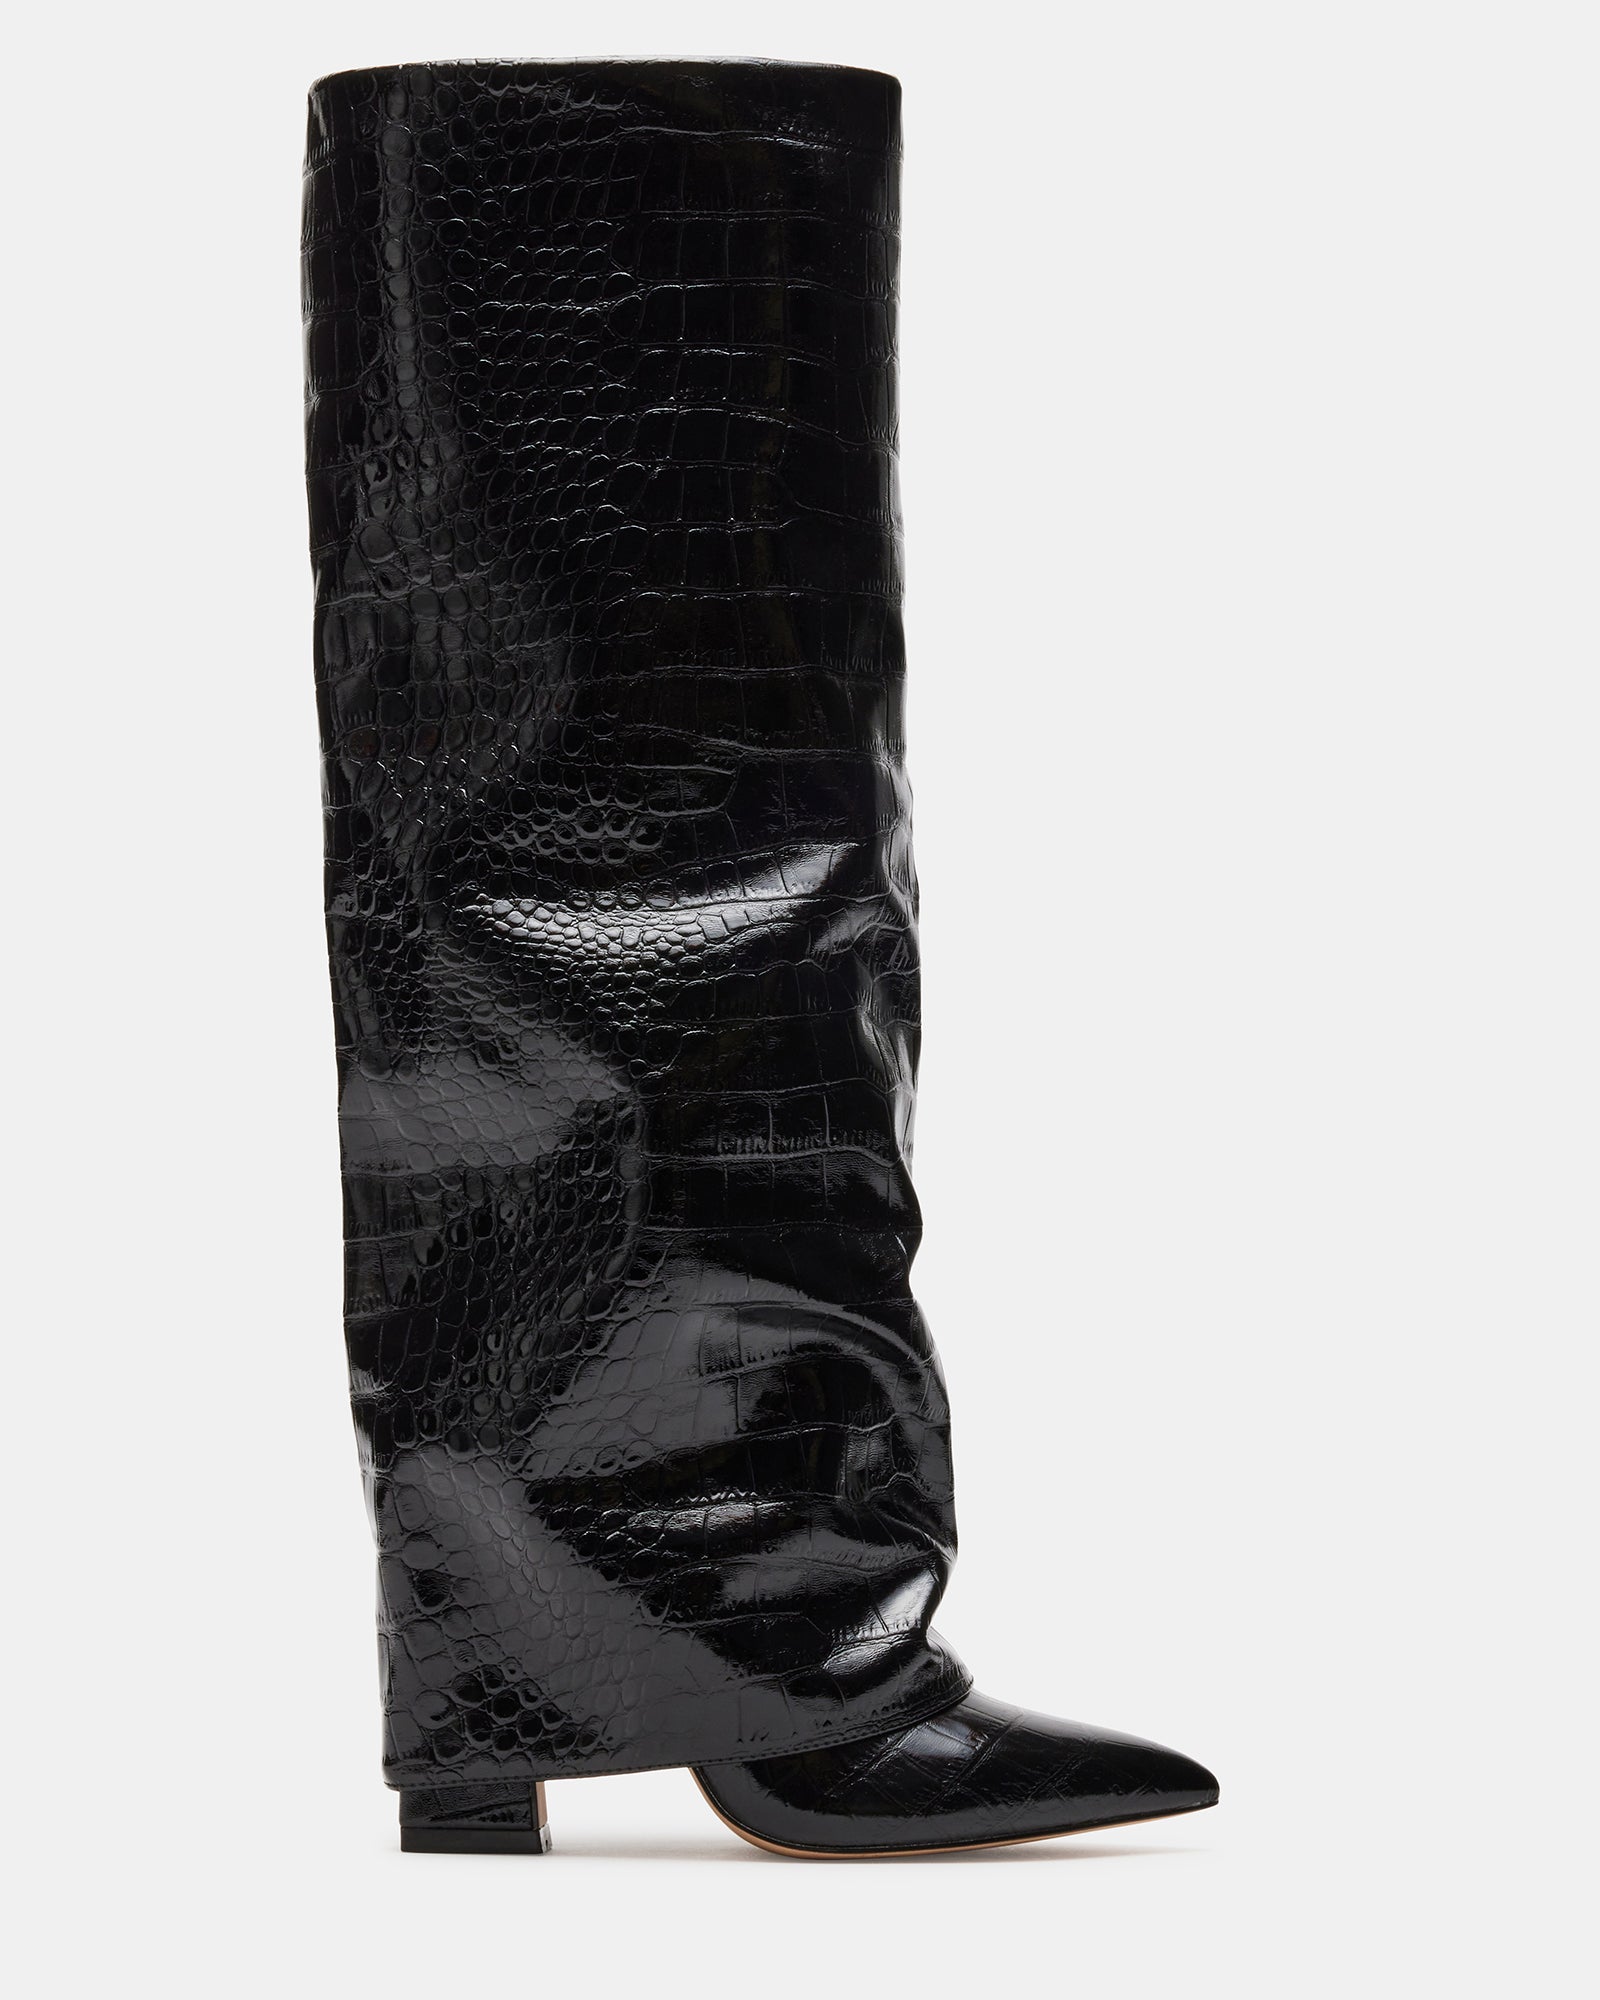 KATHLEEN Black Leather Knee High Boot  Women's Leather Boots – Steve Madden